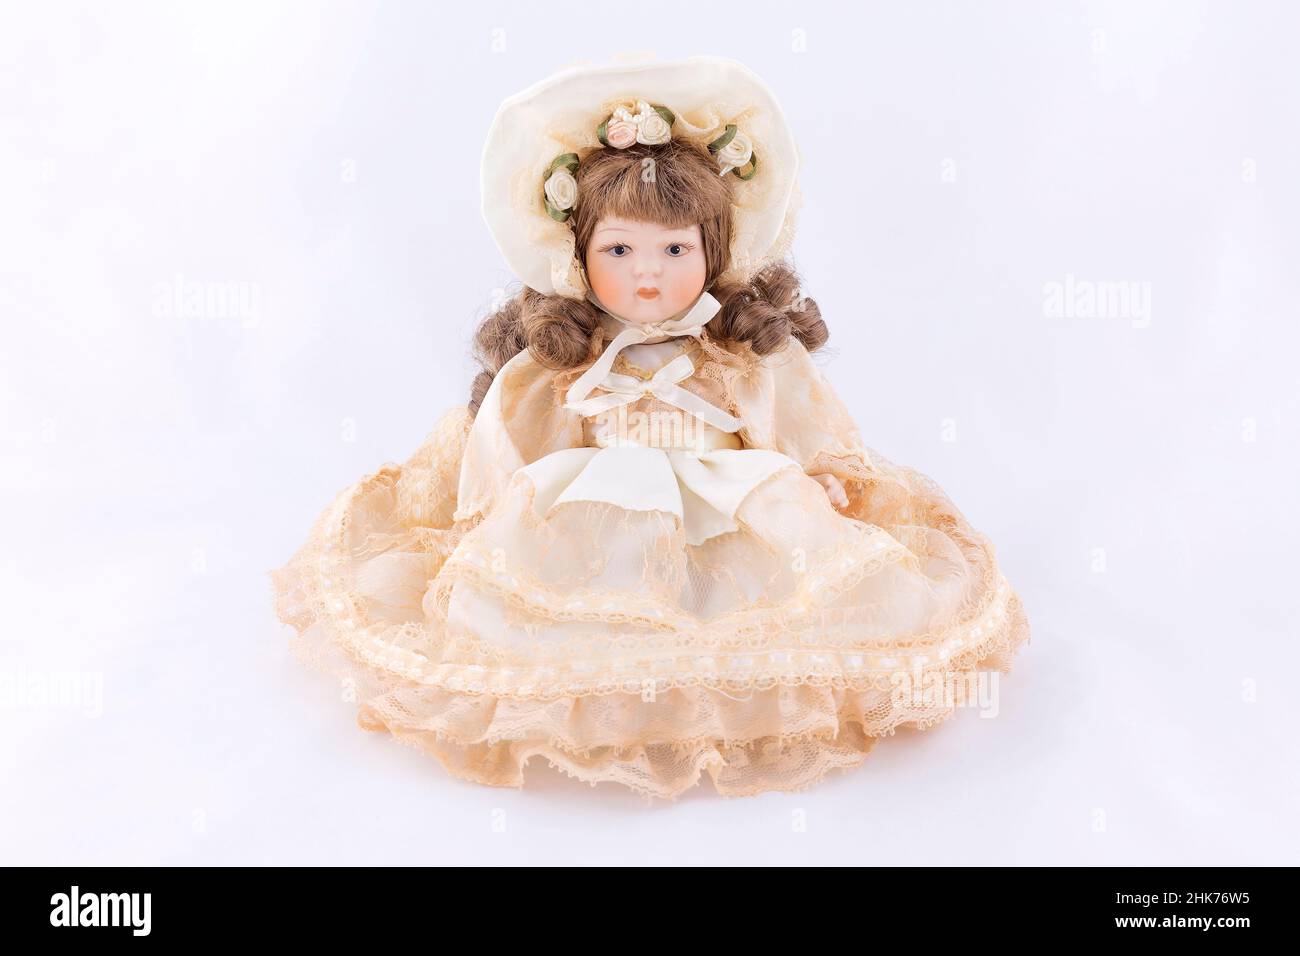 Porcelain doll, isolated on white background Stock Photo